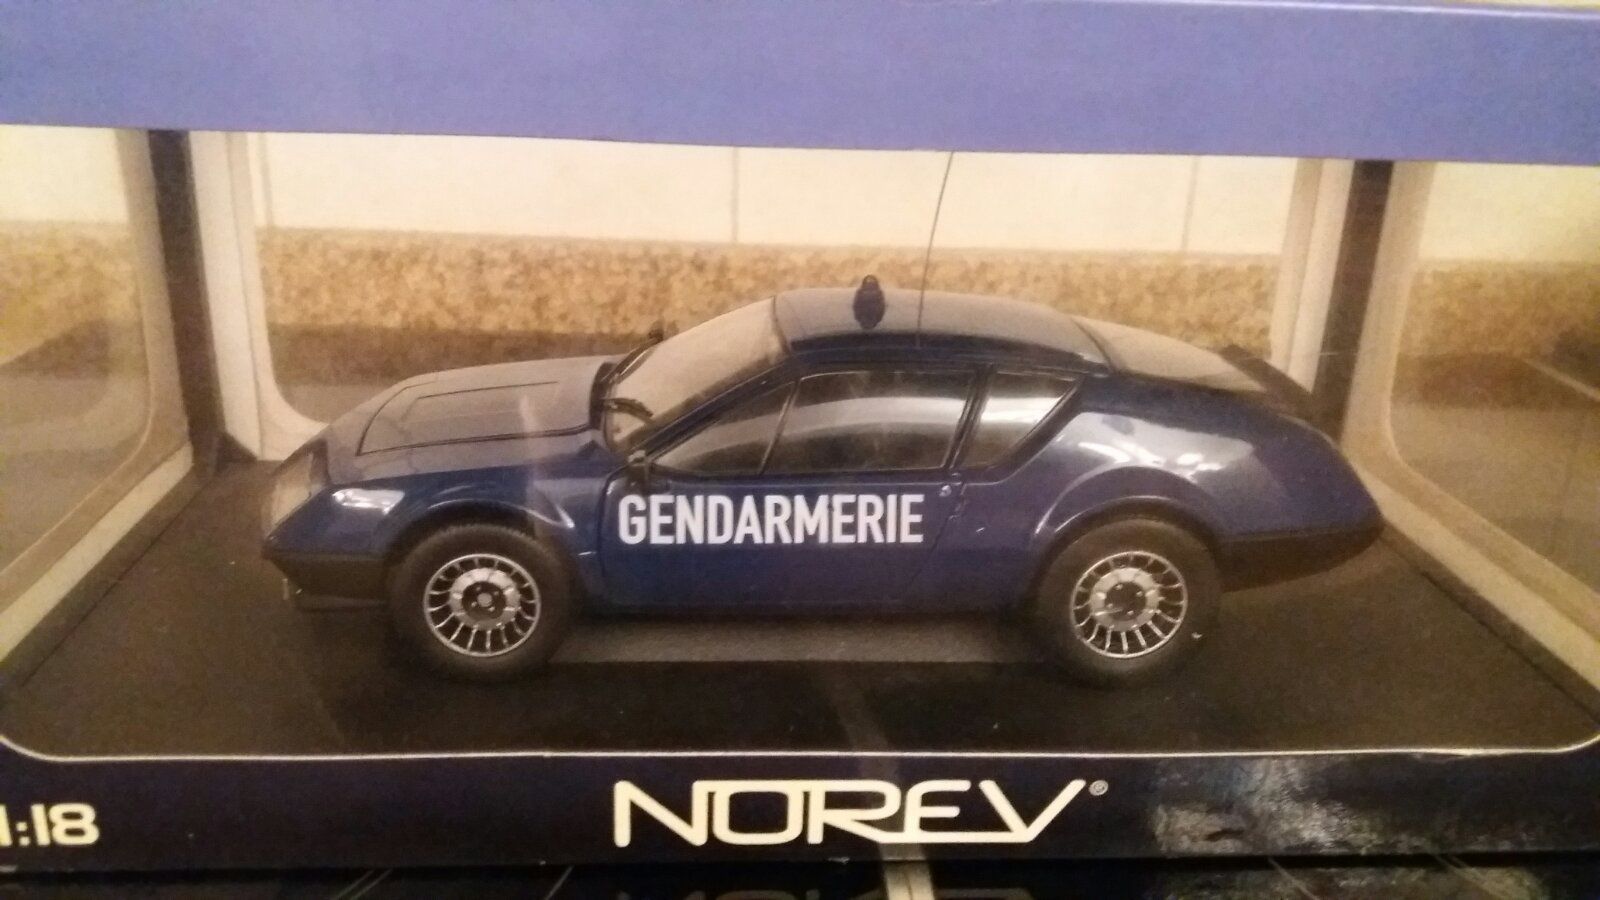 NOREV Renault Gendarmerie модель масштаб 1:18 (1/18)